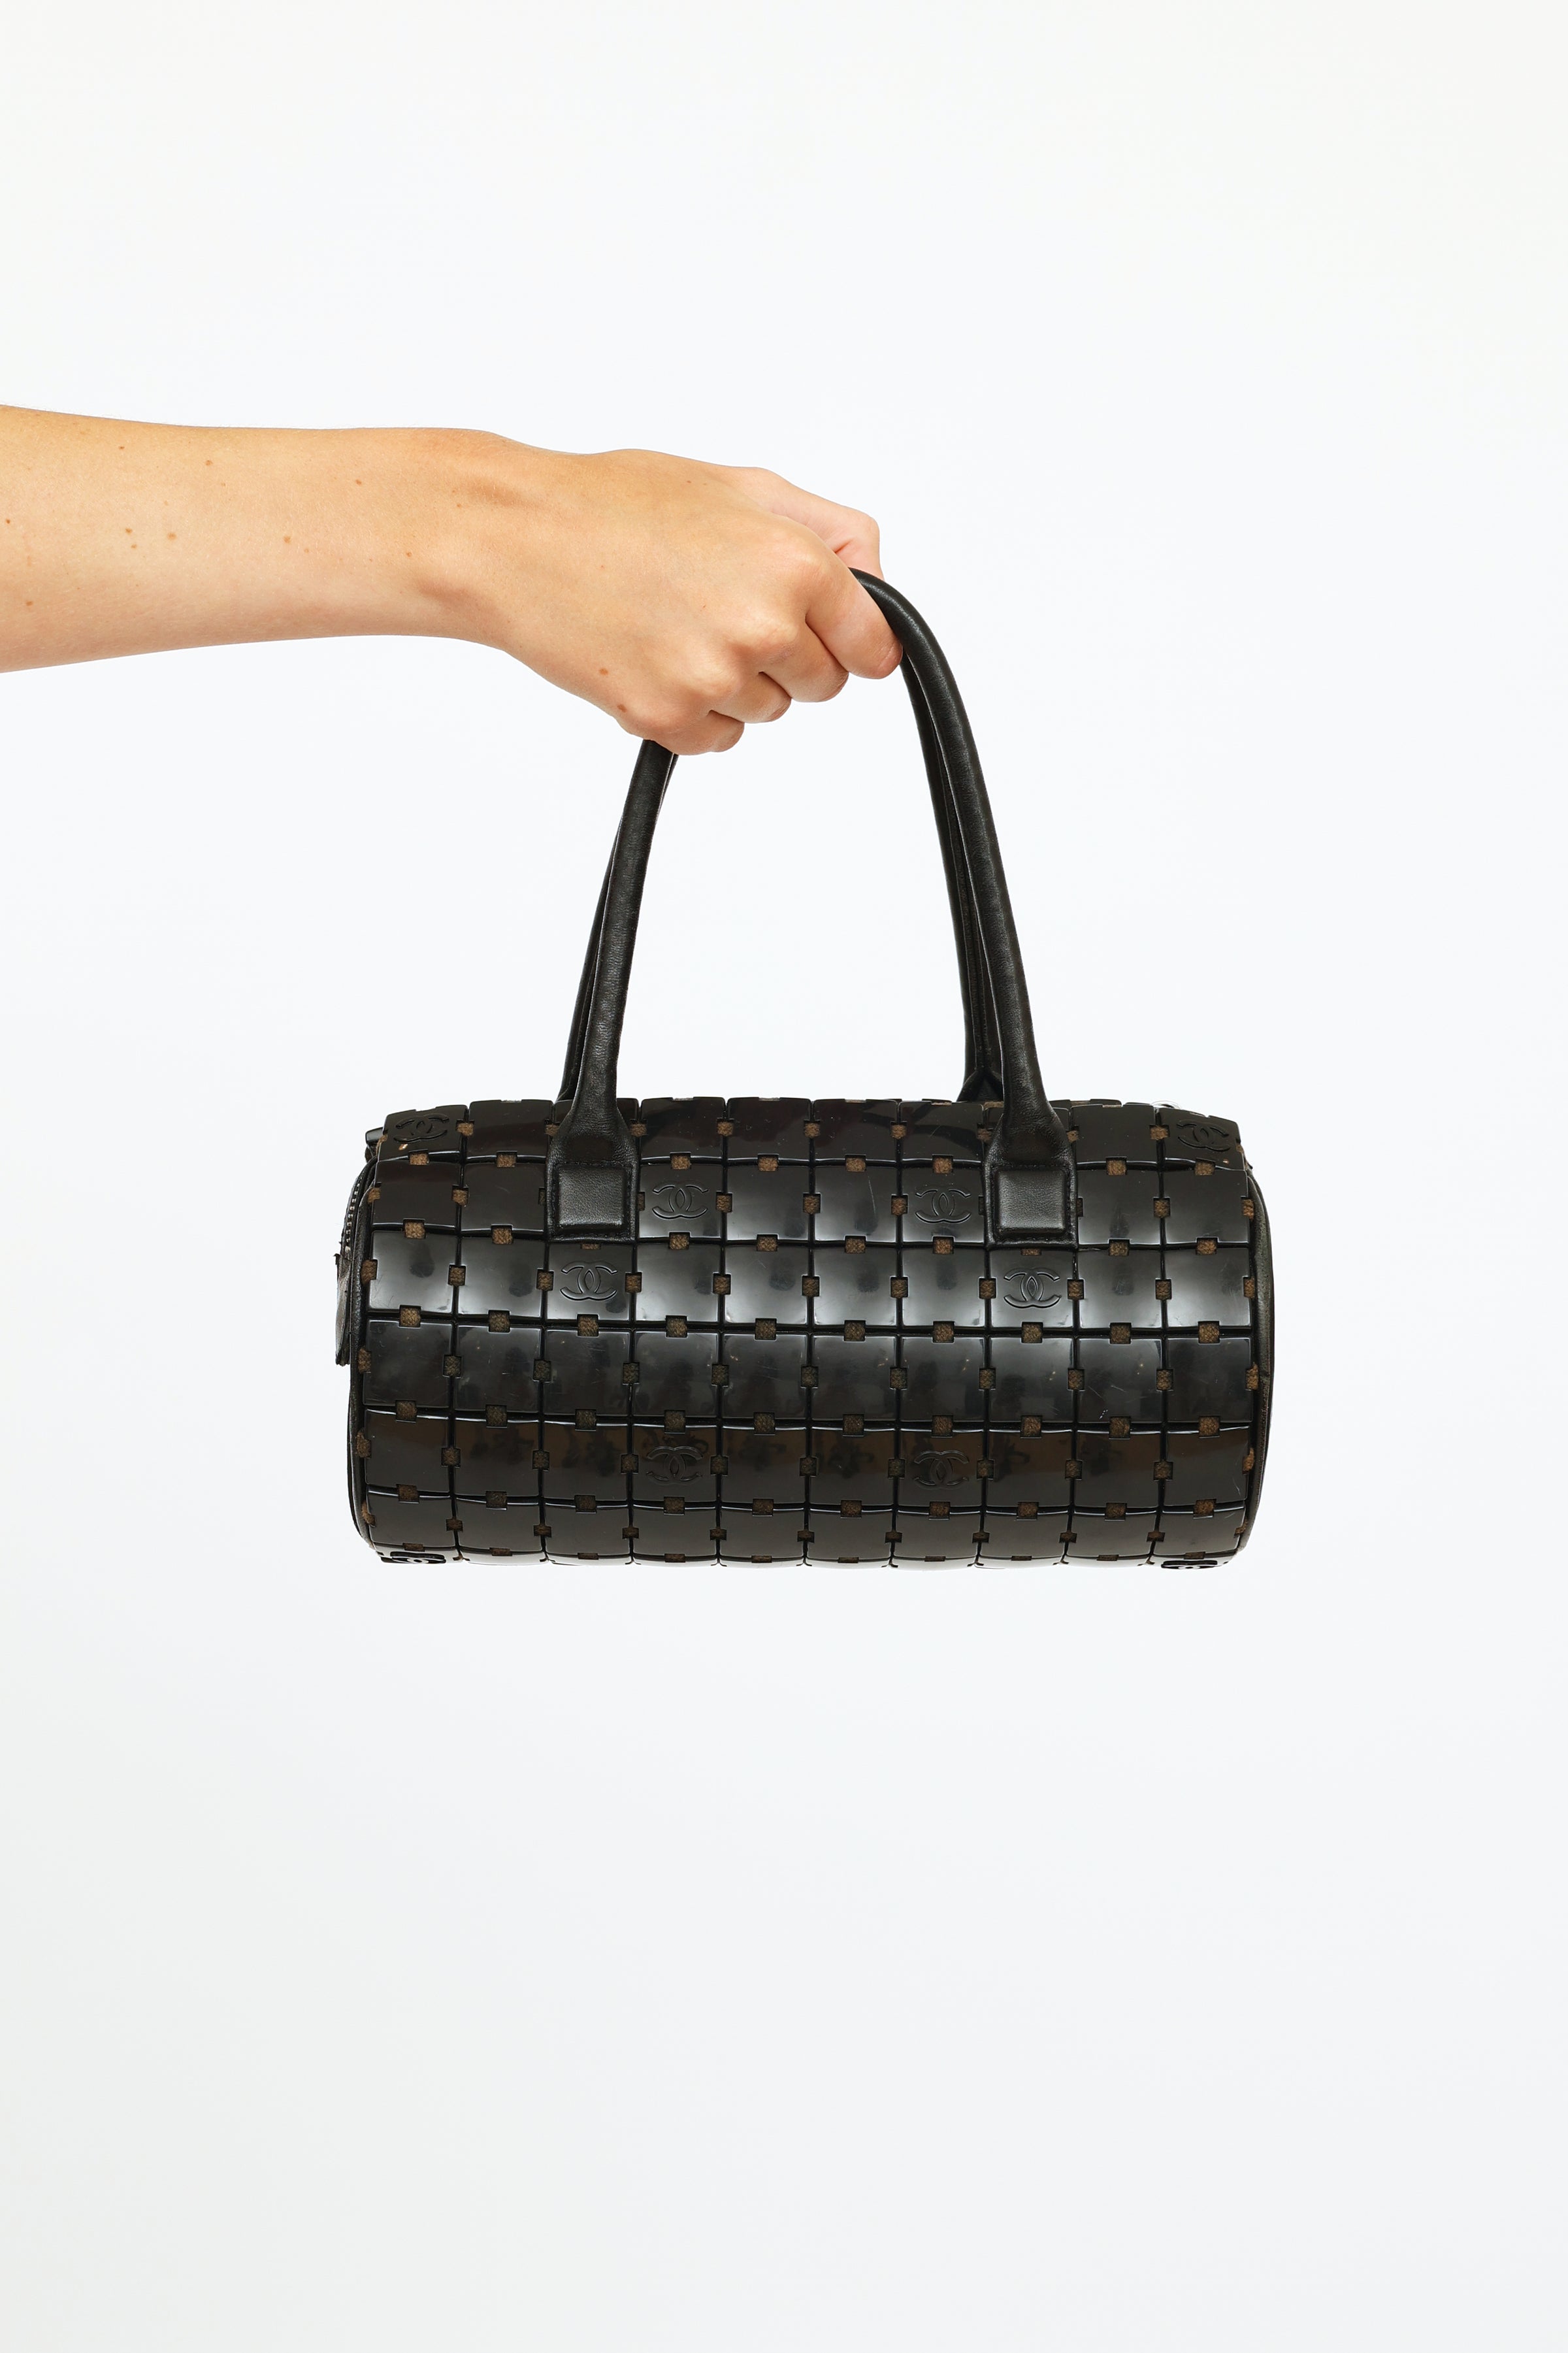 Brand Retro Cylindrical Bag Crocodile Print Shoulder Bags for